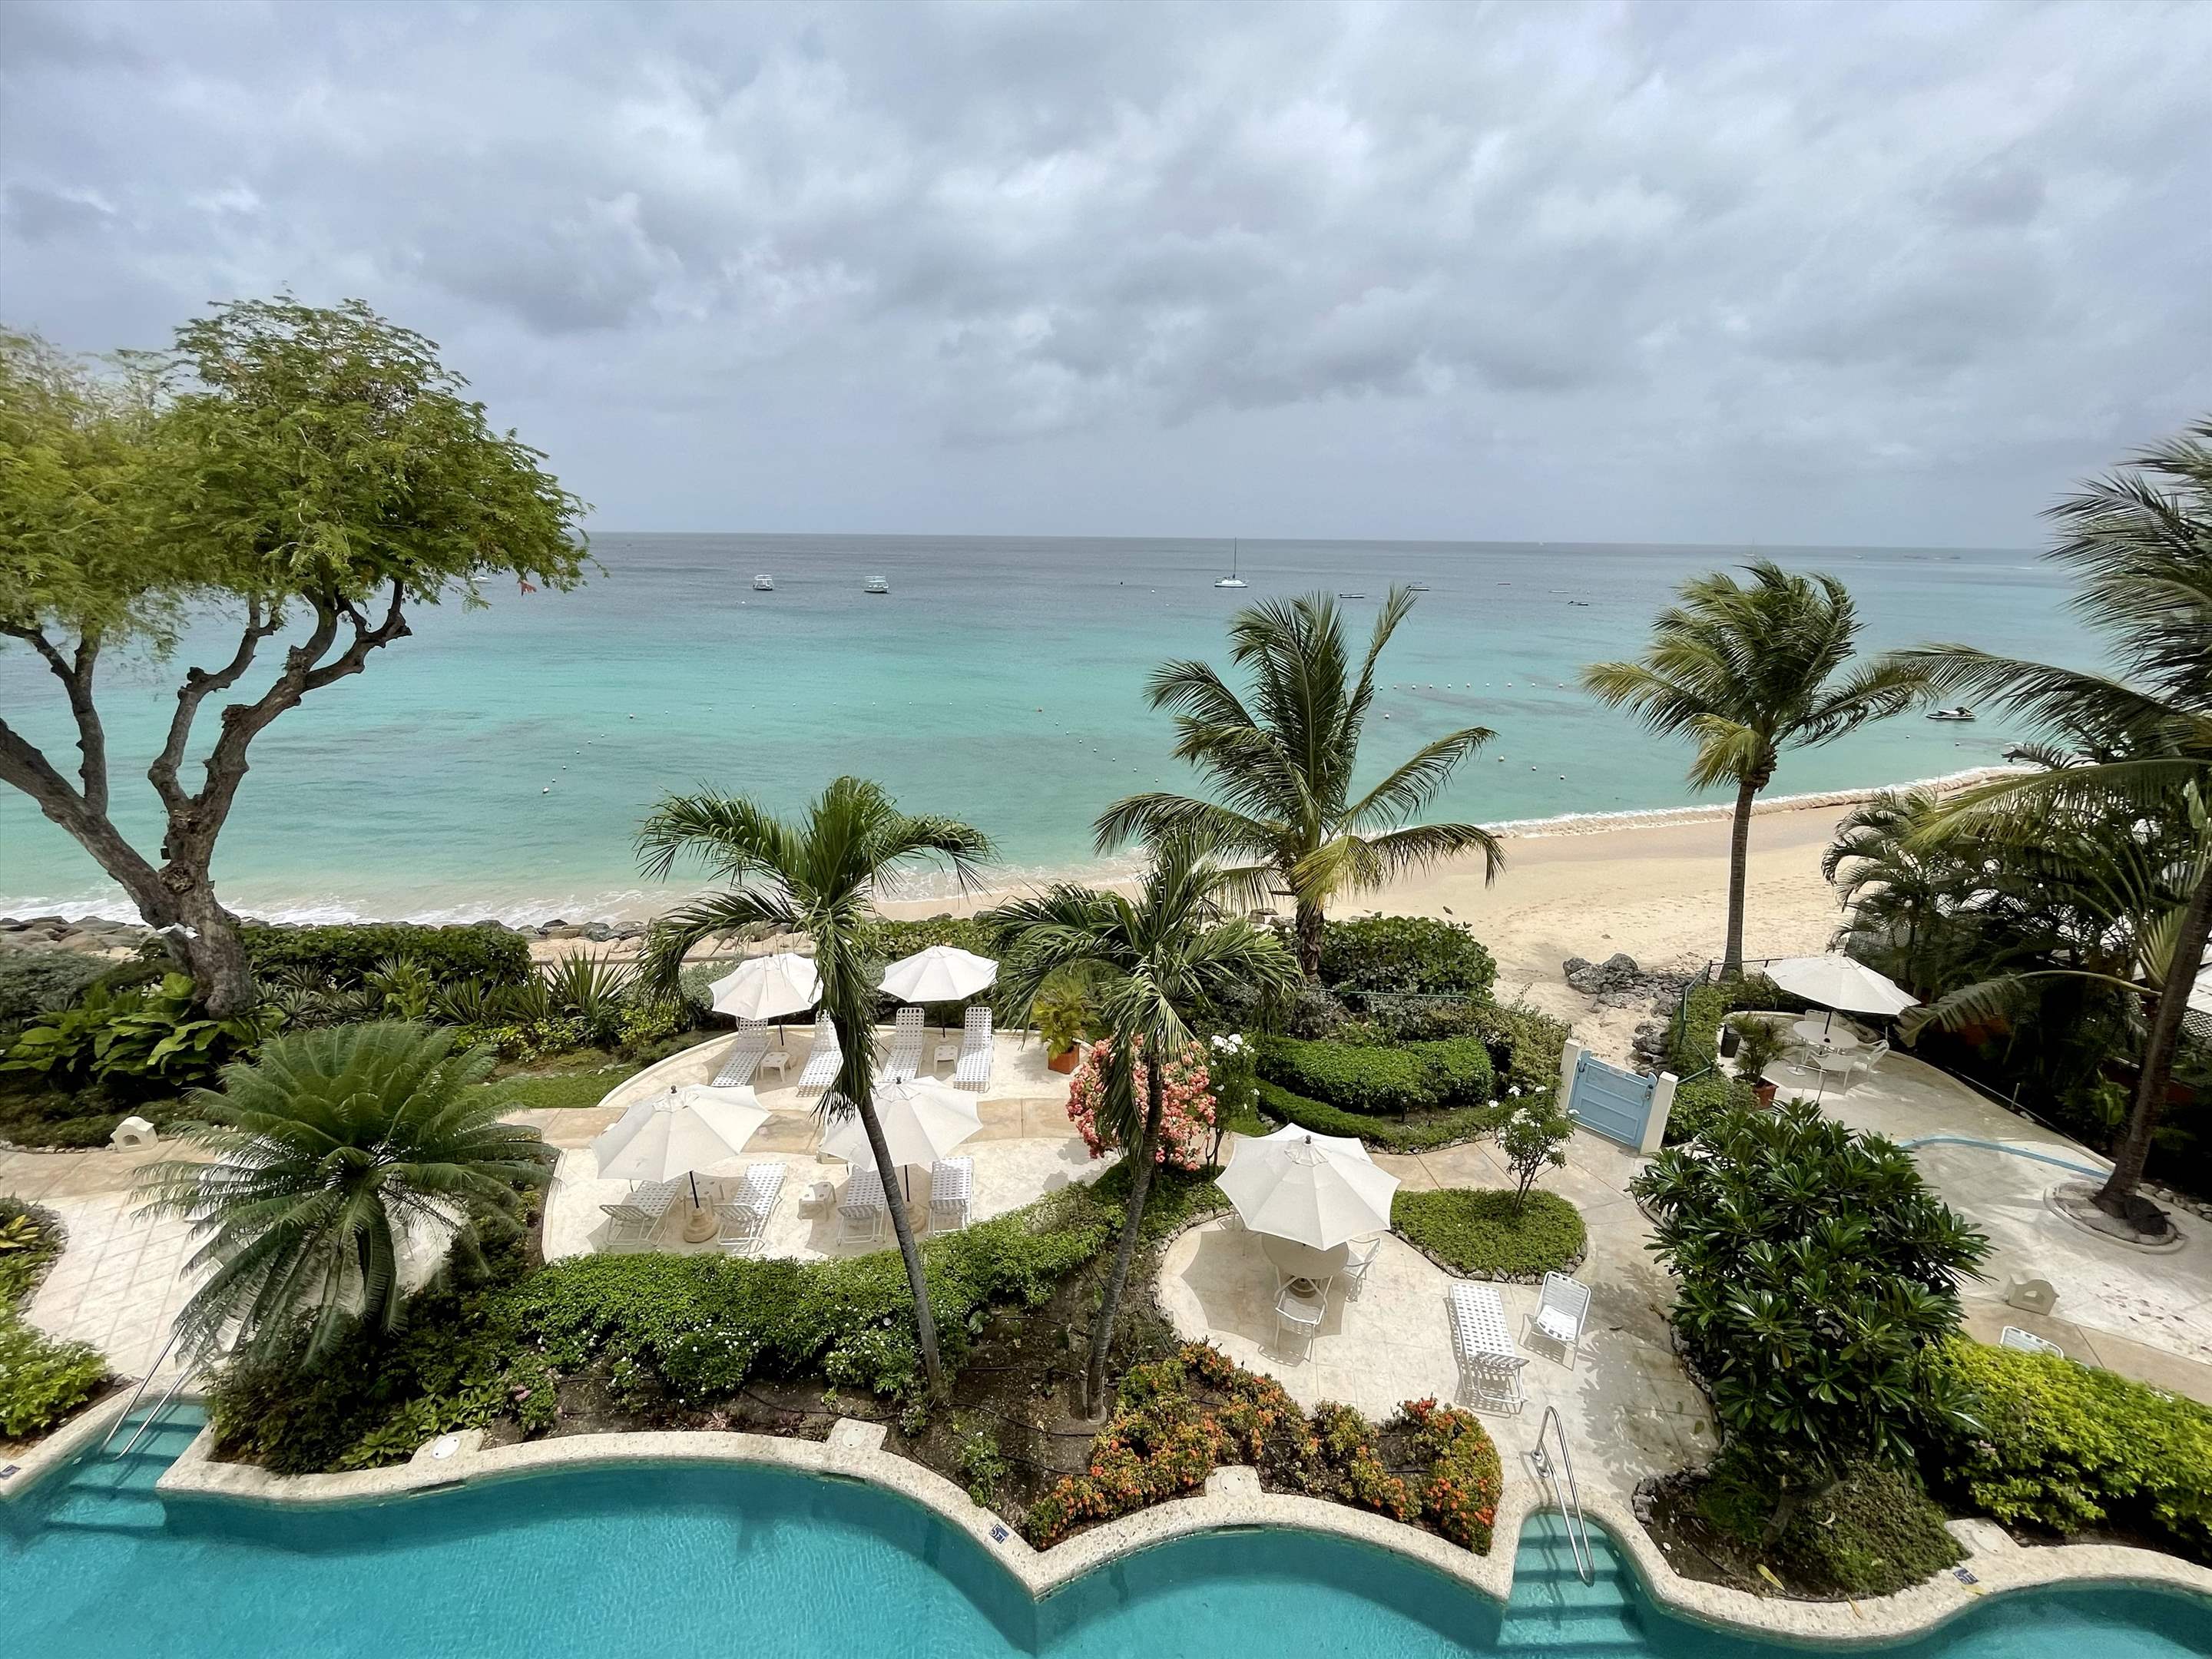 Villas on the Beach 403, 3 bedroom, 3 bedroom apartment in St. James & West Coast, Barbados Photo #1